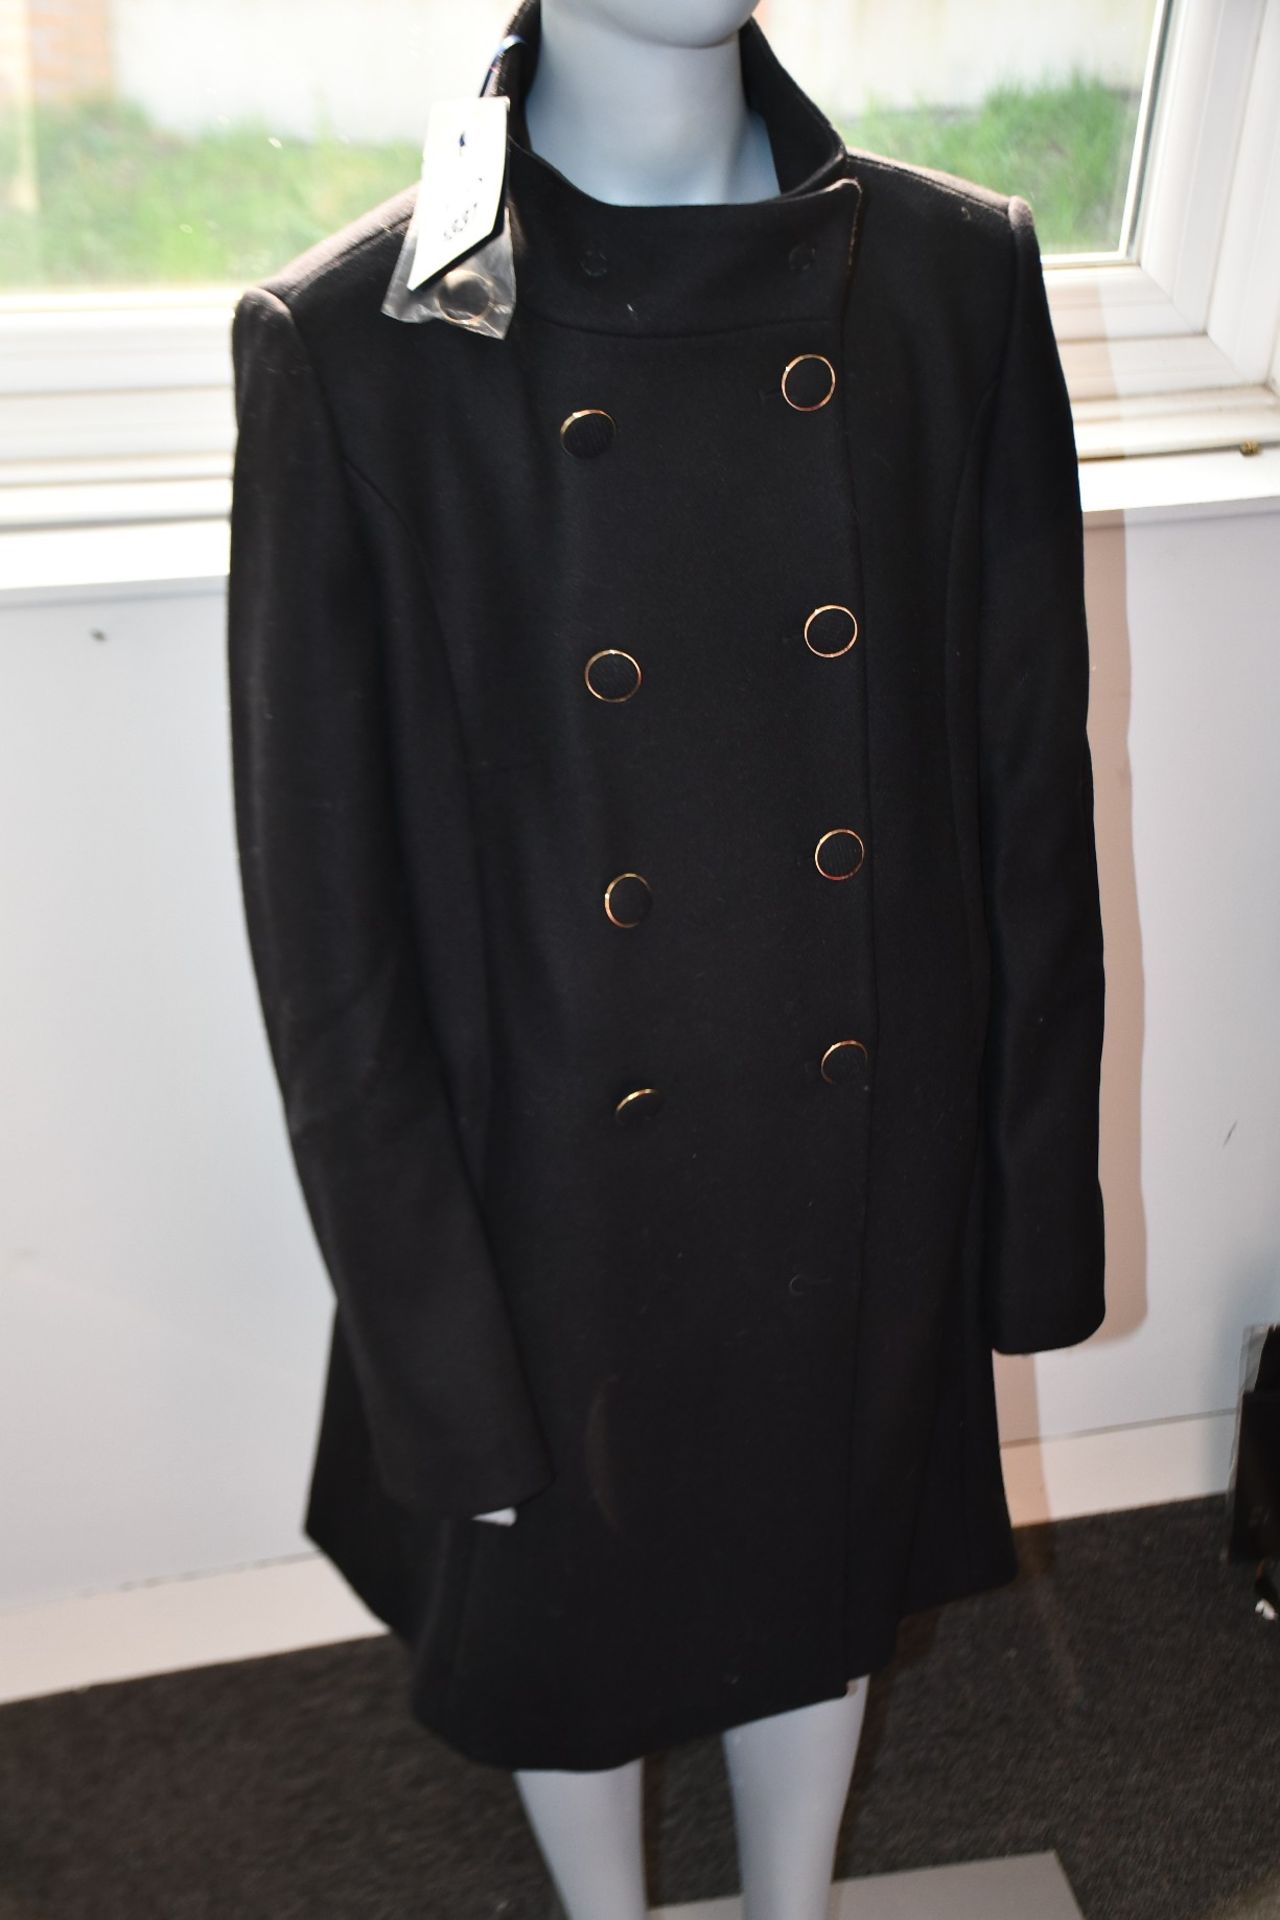 An as new Liu Jo double breasted coat (UK 10 - RRP £339).